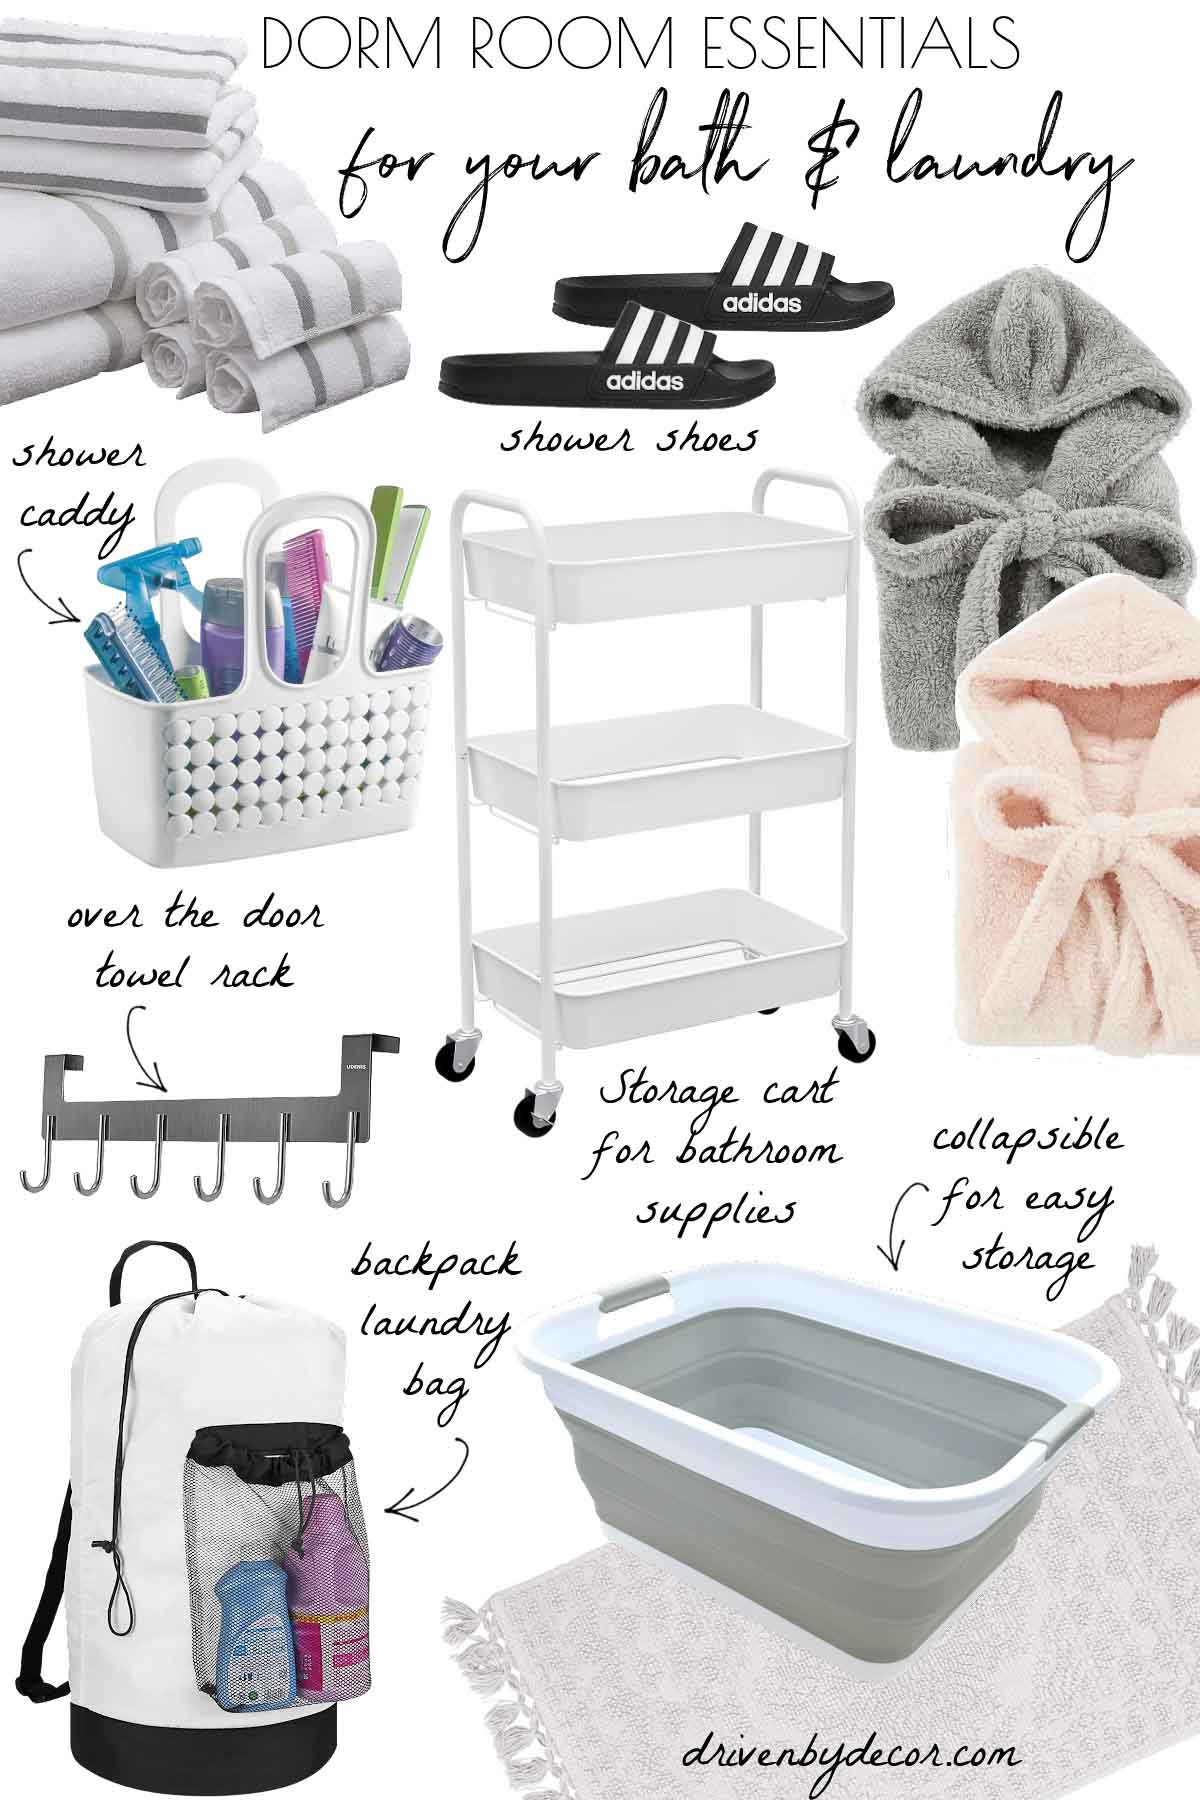 Dorm room bath and laundry essentials